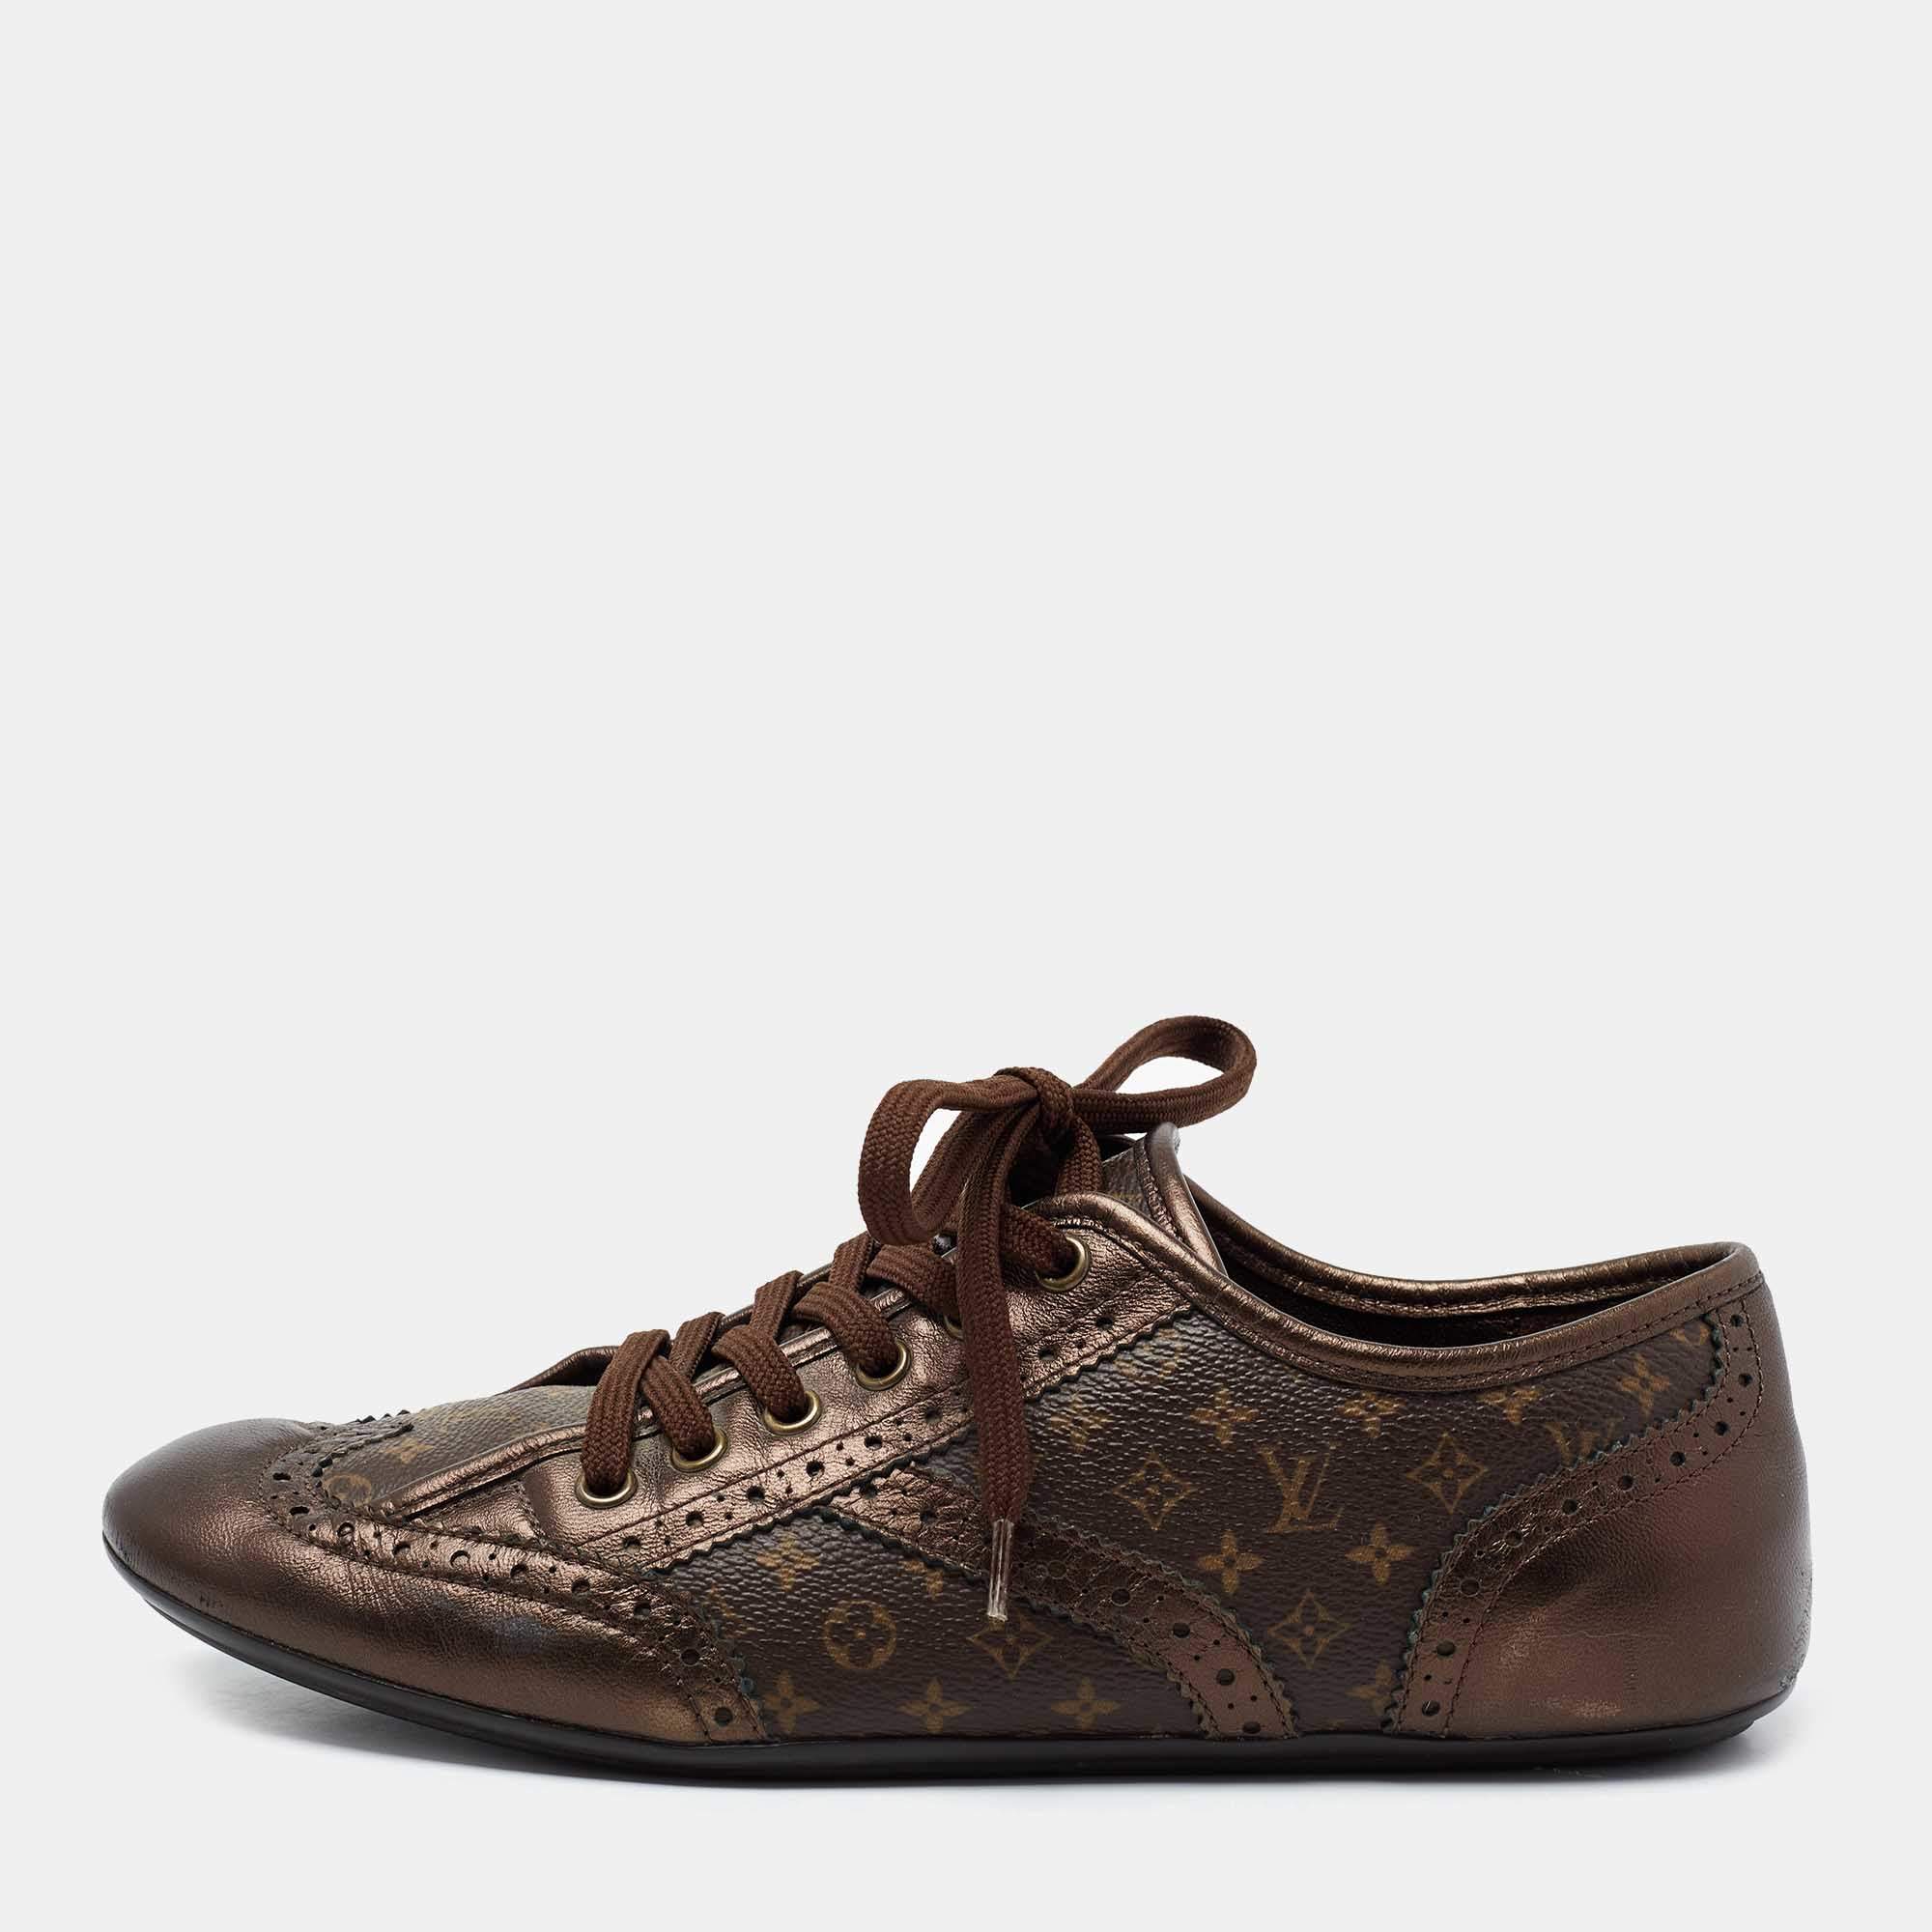 Louis Vuitton Rose Ballerine Damier Azur Tahitienne Bora Bora Sneakers Size 37